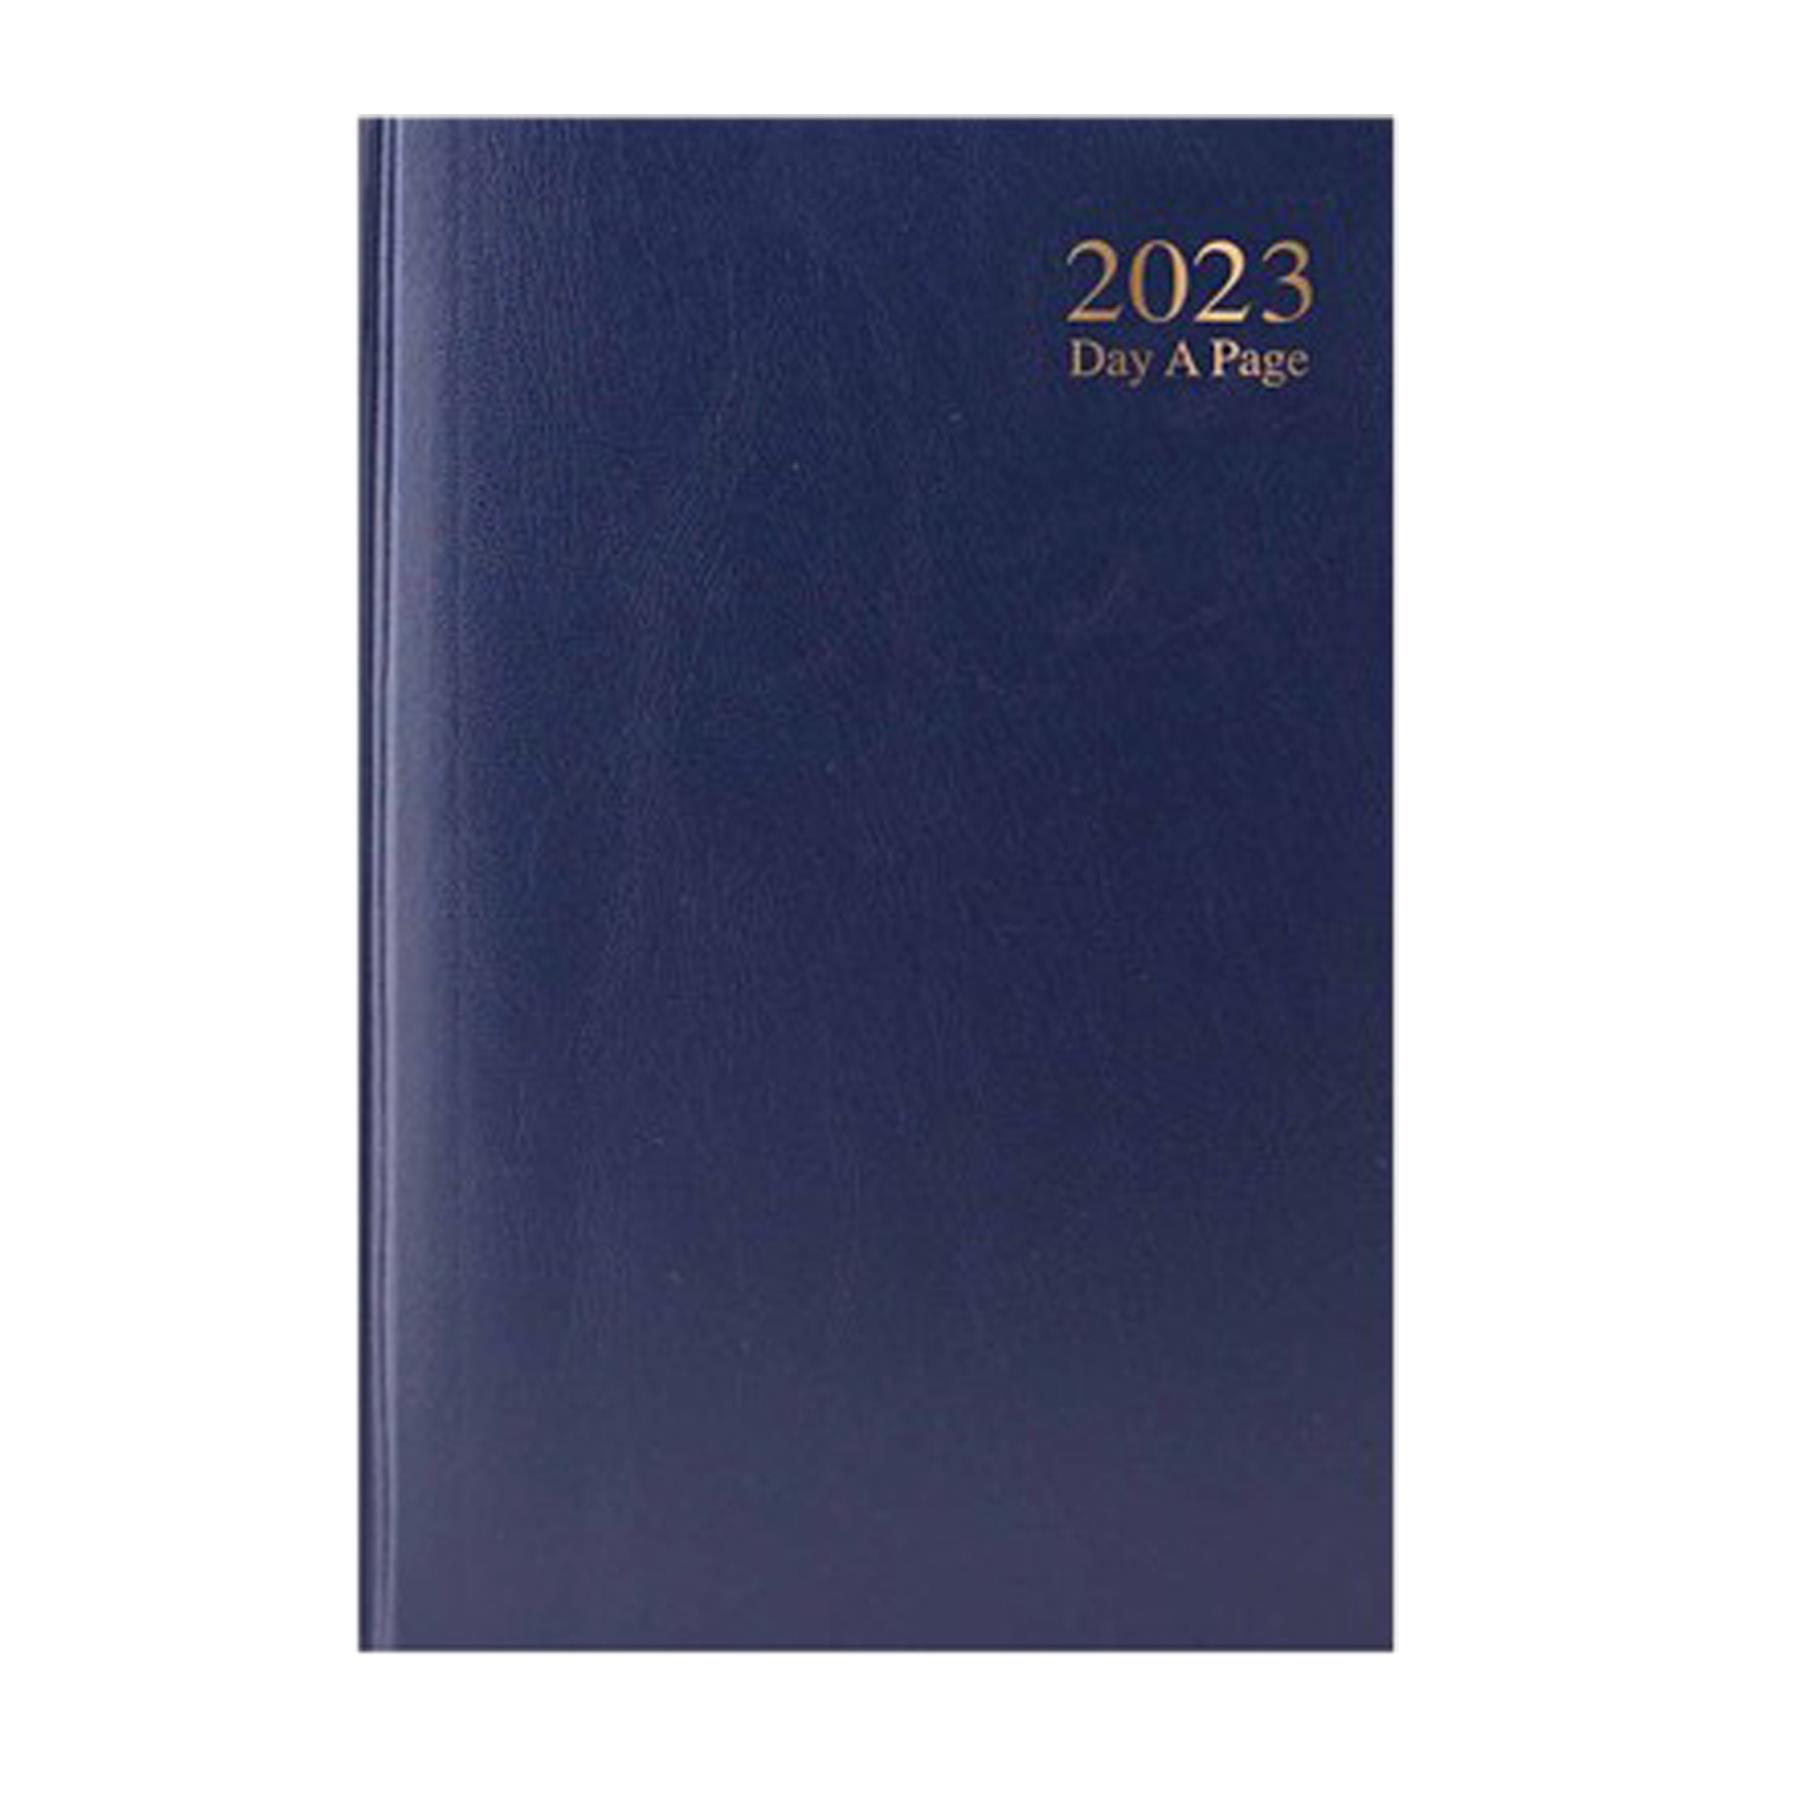 2023 A5 Hardback Day a Page Diary 3182 - Navy